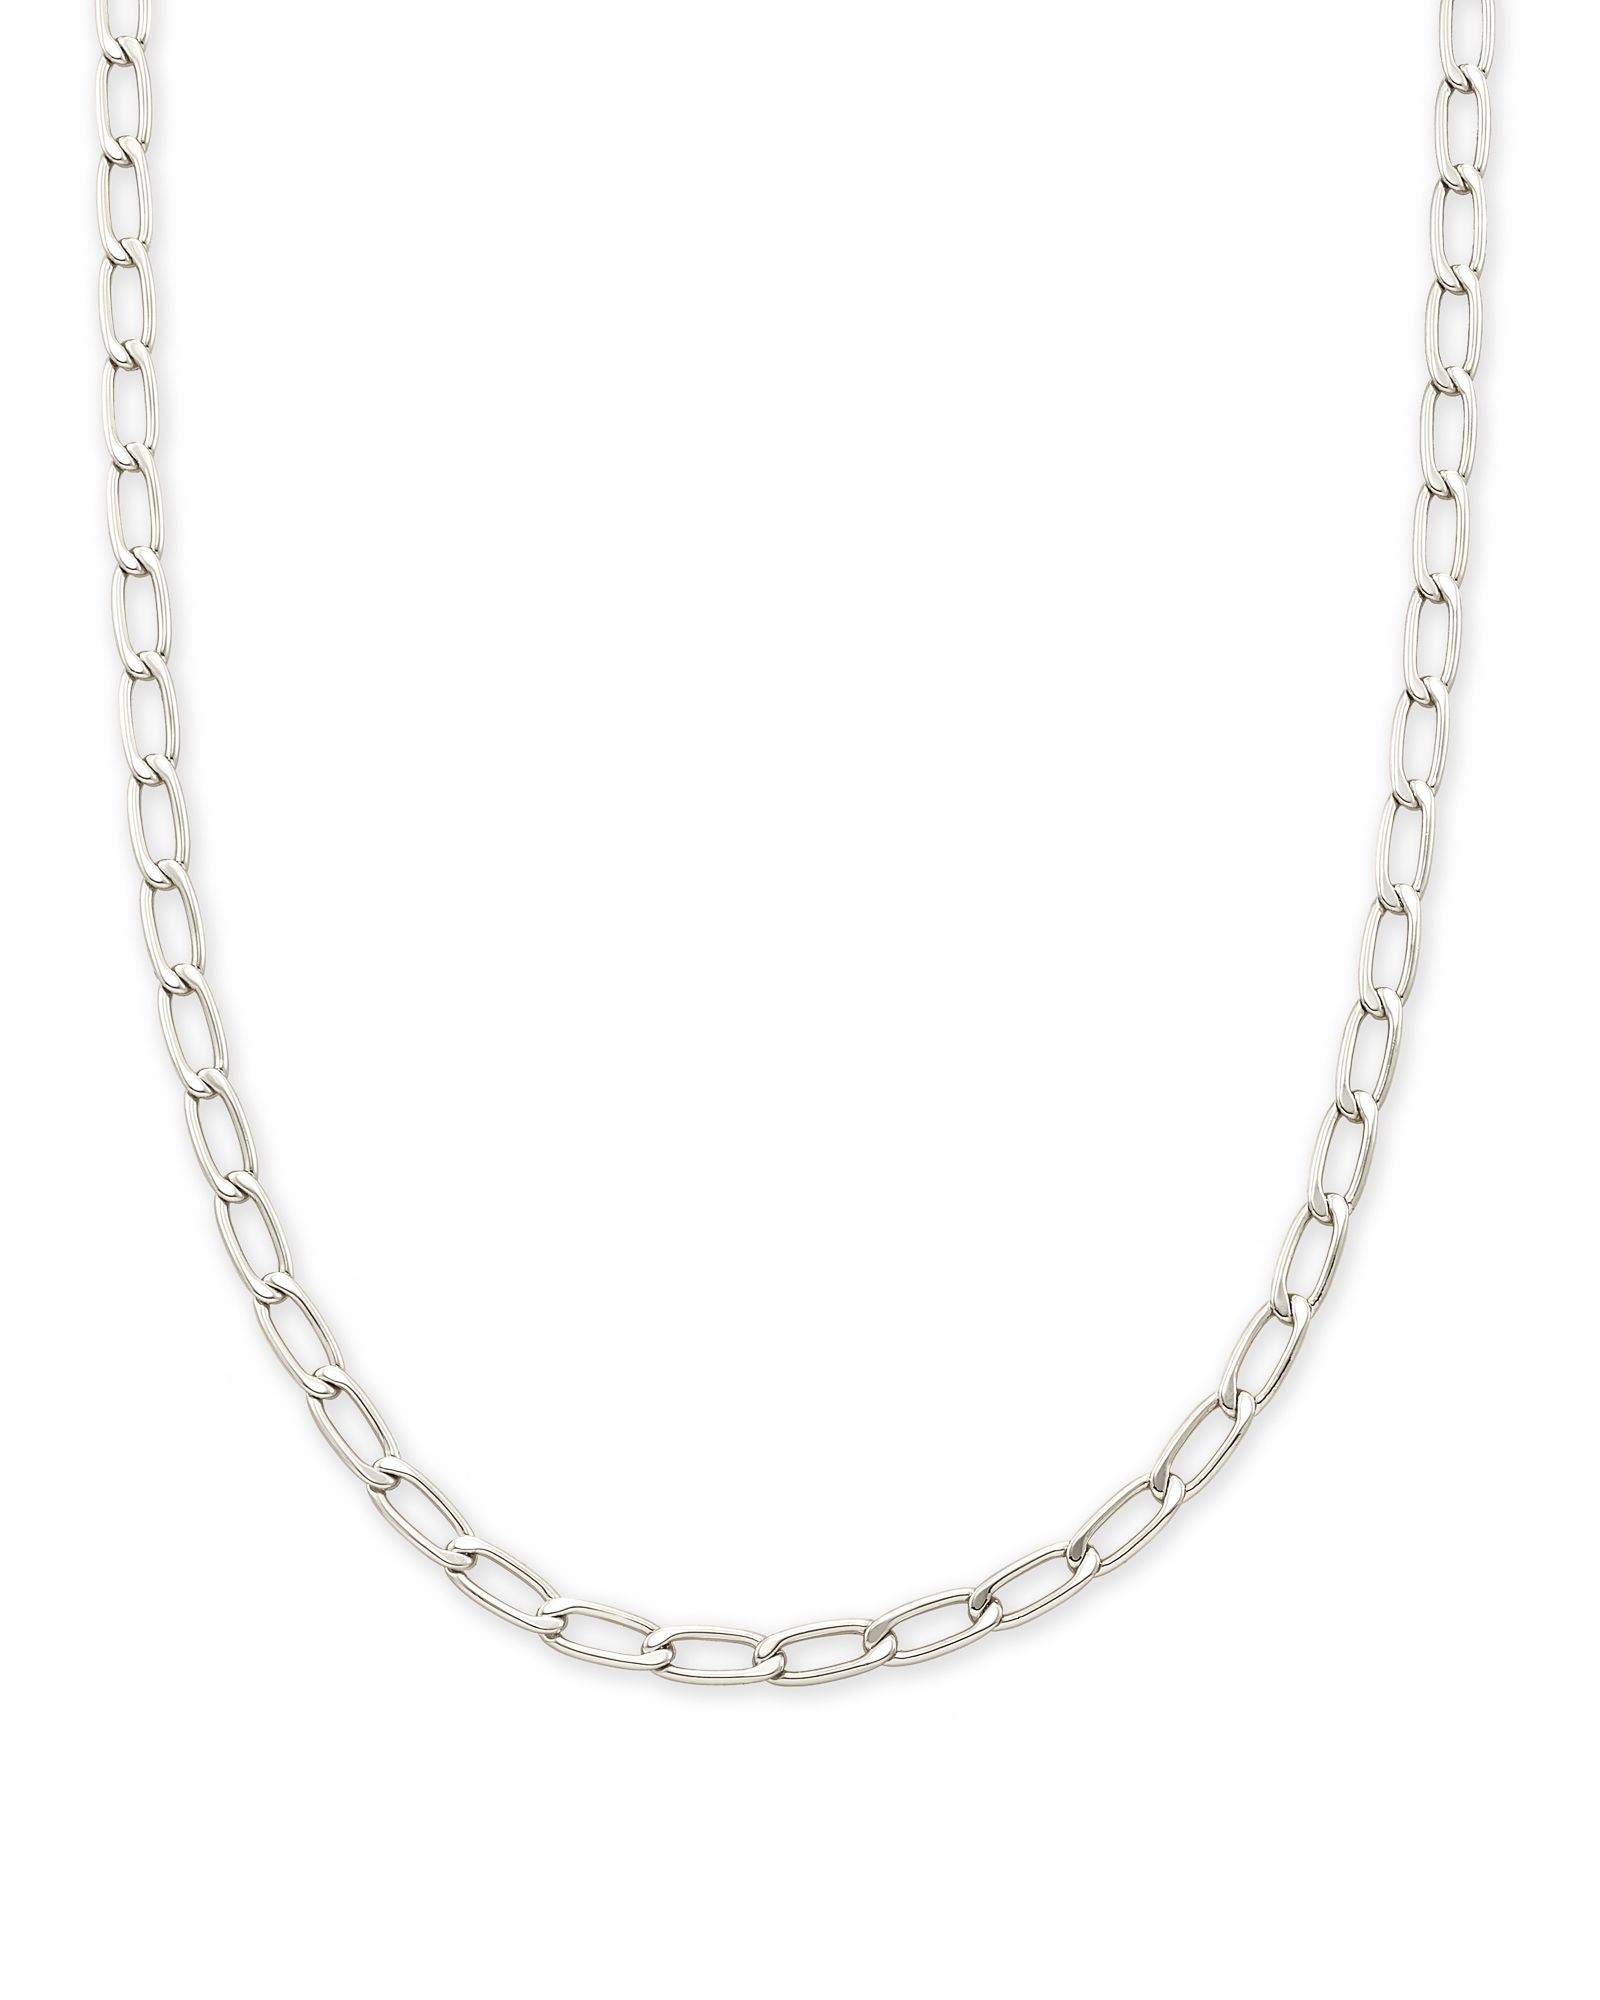 Merrick Chain Necklace in Rhodium